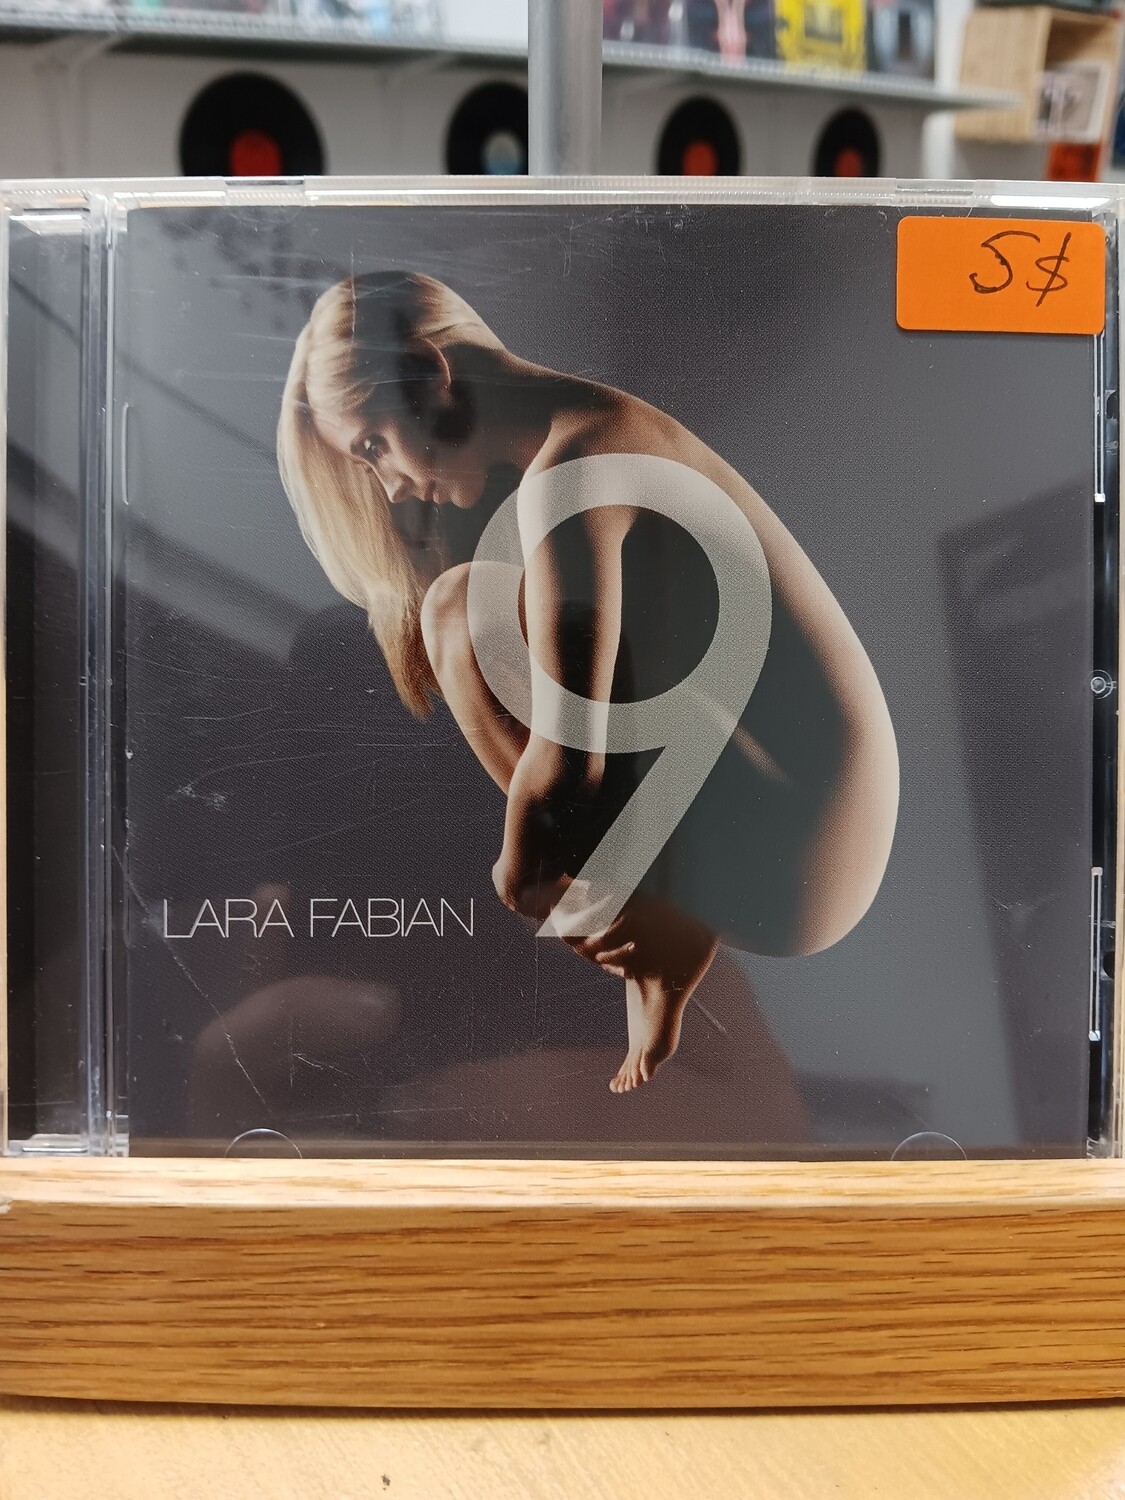 Lara Fabian - 9 (CD)